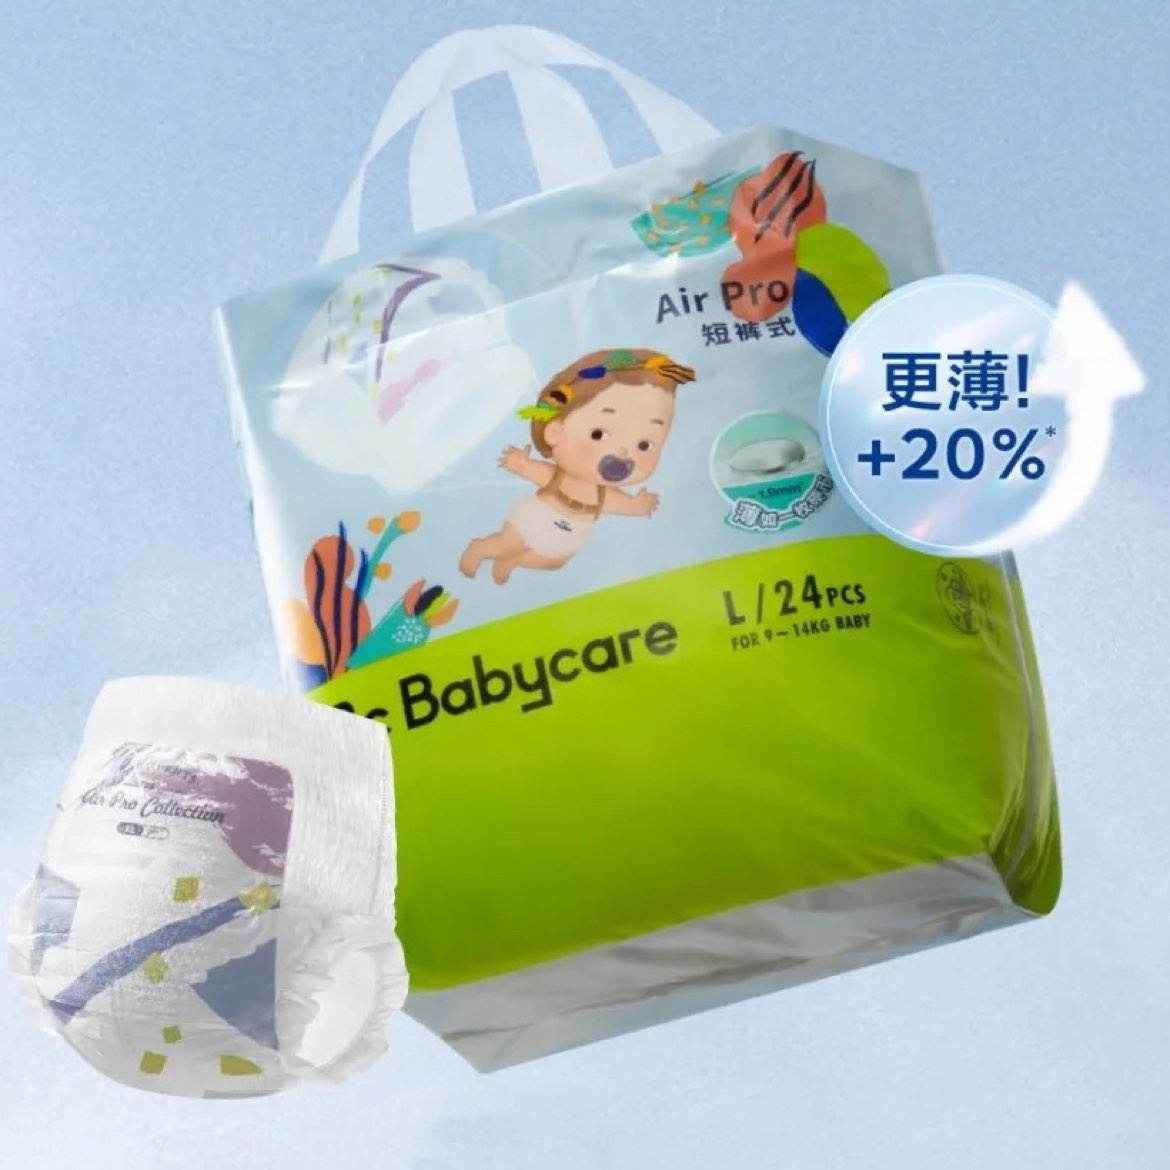 babycare Air pro日用拉拉裤袋装成长裤mini装 L24/XL24/XXL20/XXXL18片 44元